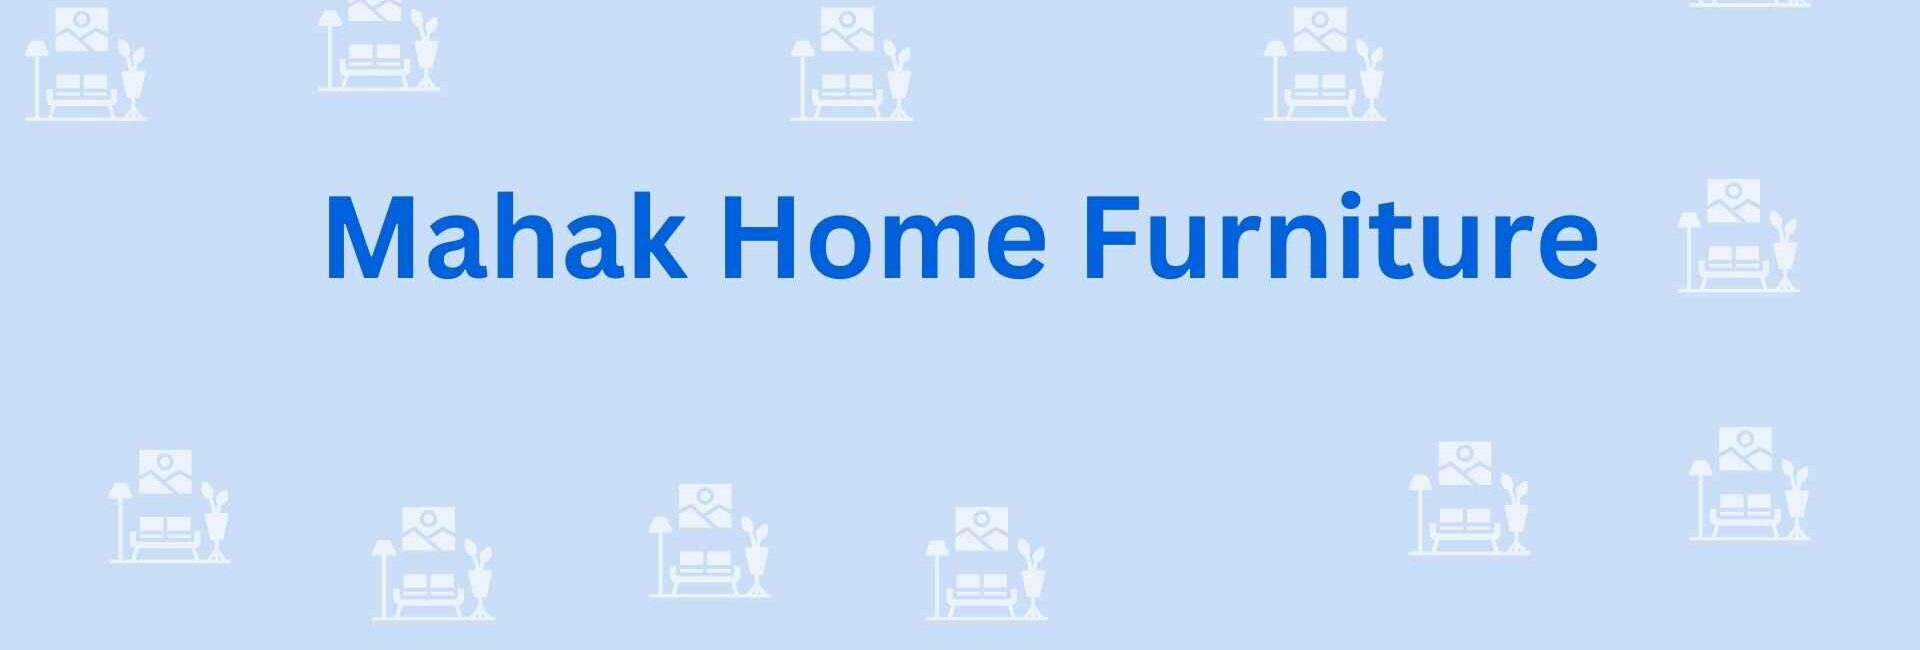 Mahak Home Furniture - Furniture Dealer in Noida